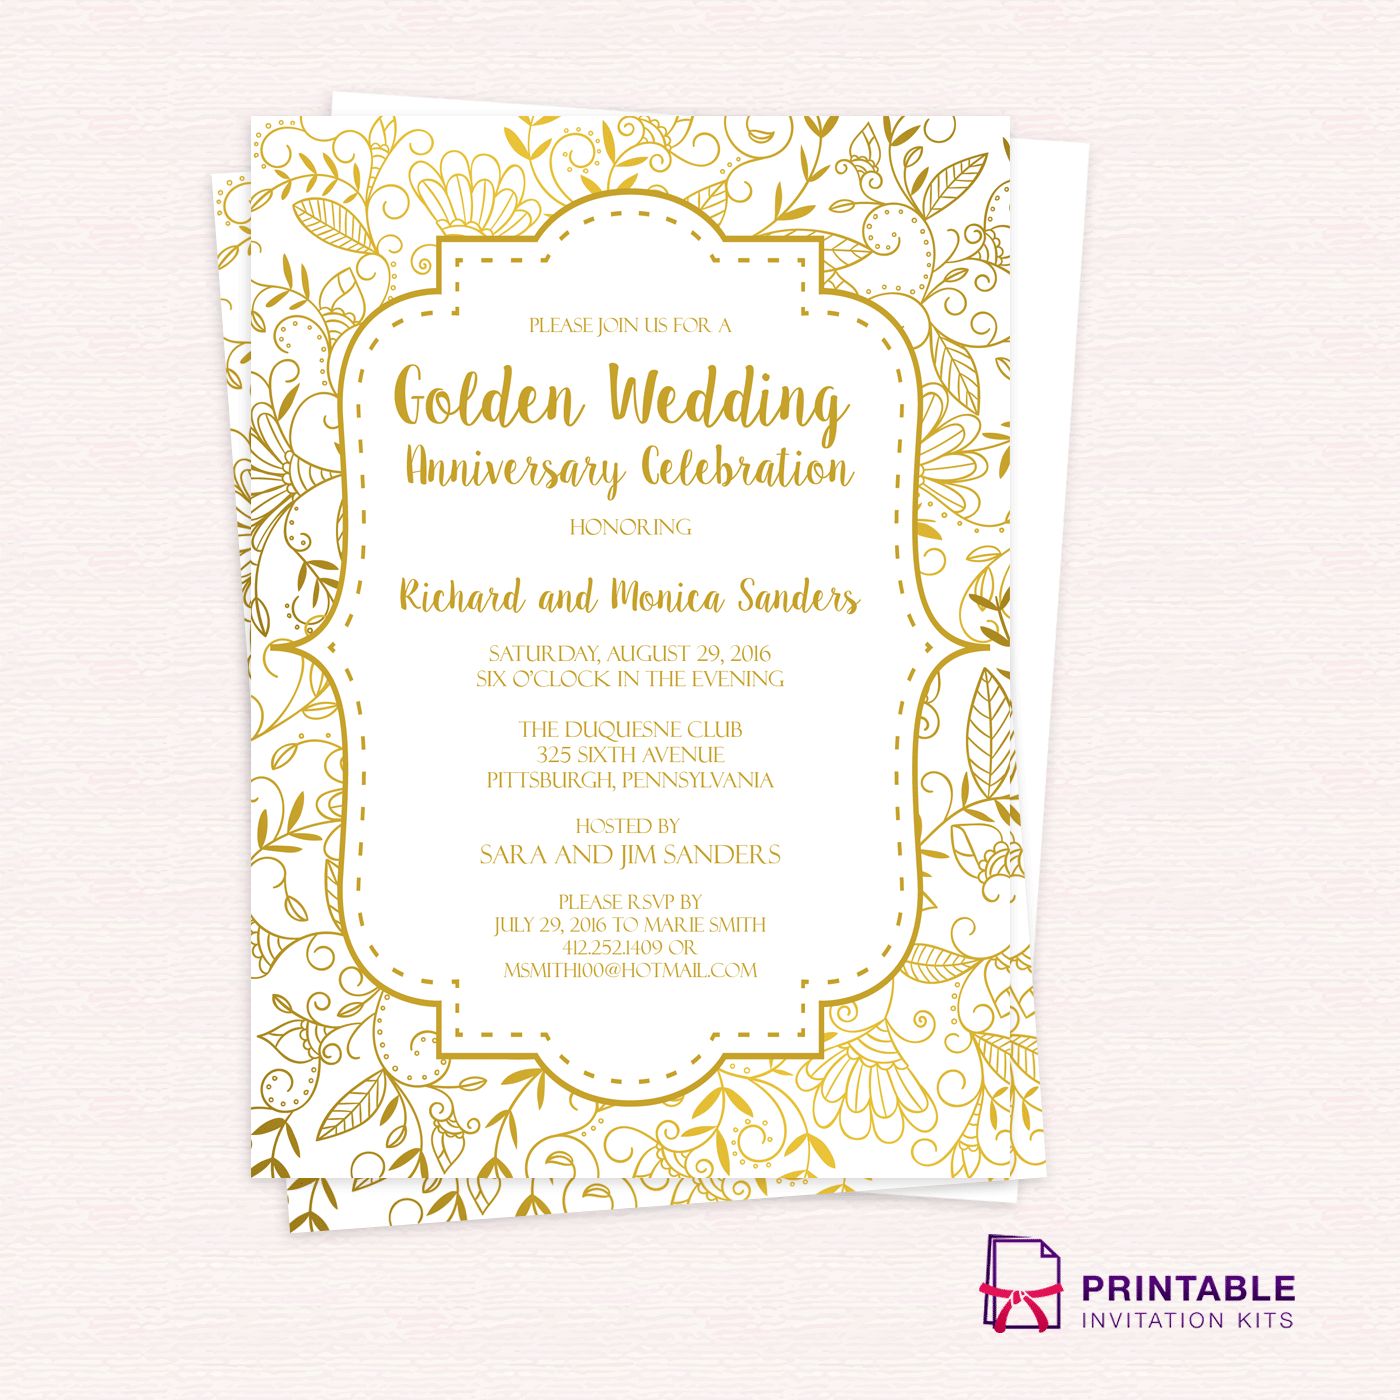 Golden Wedding Anniversary Invitation Template Wedding Invitation with regard to dimensions 1400 X 1400